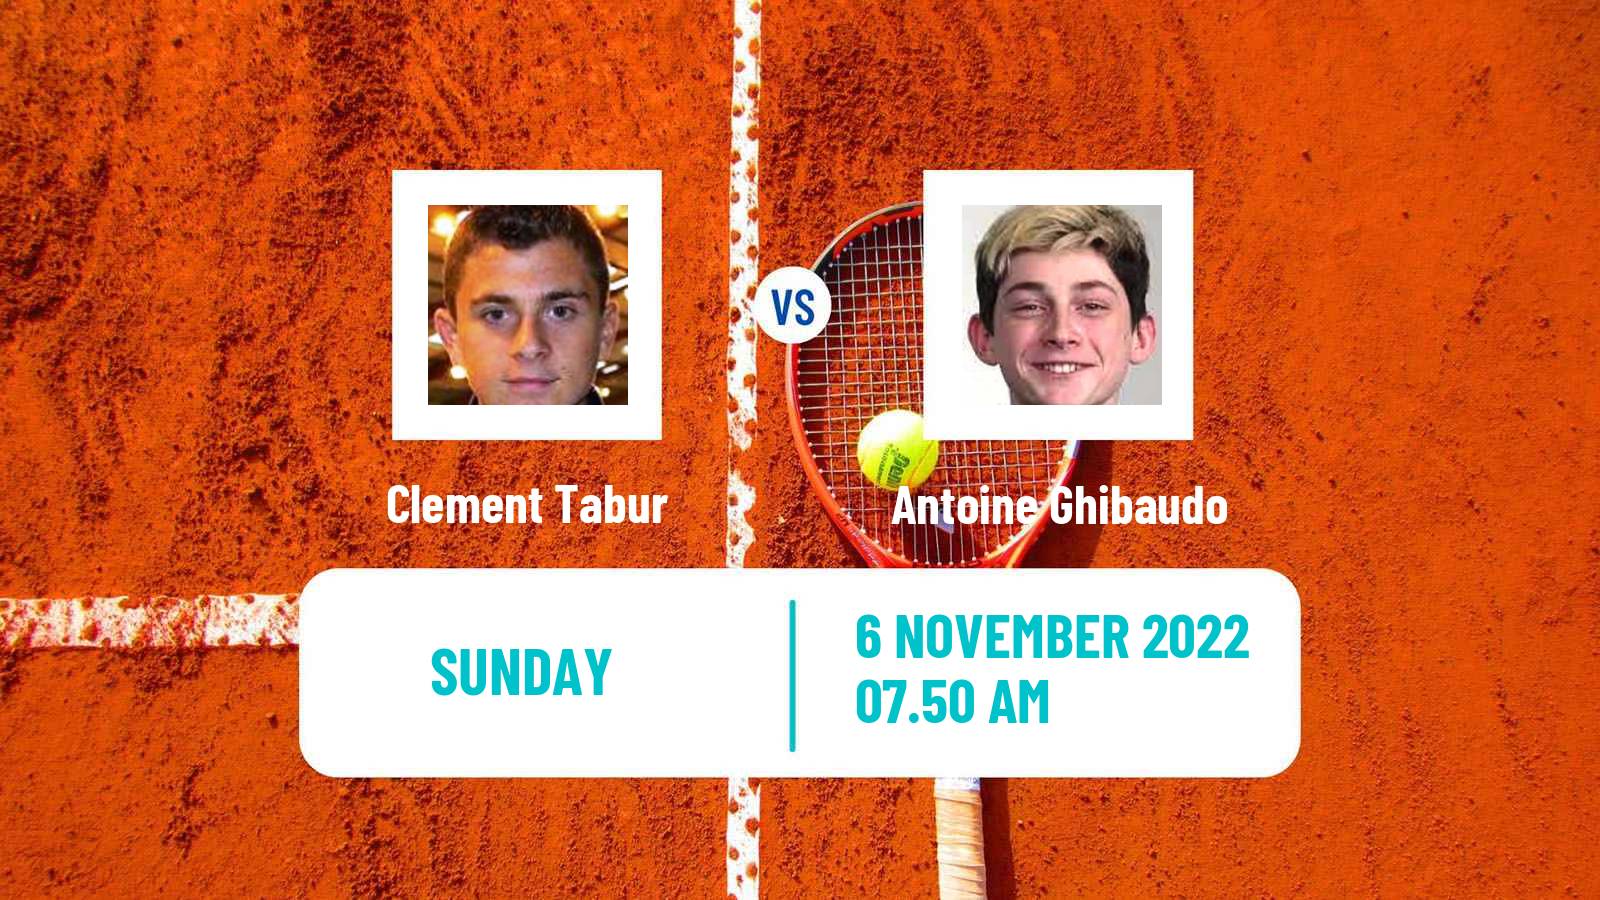 Tennis ATP Challenger Clement Tabur - Antoine Ghibaudo